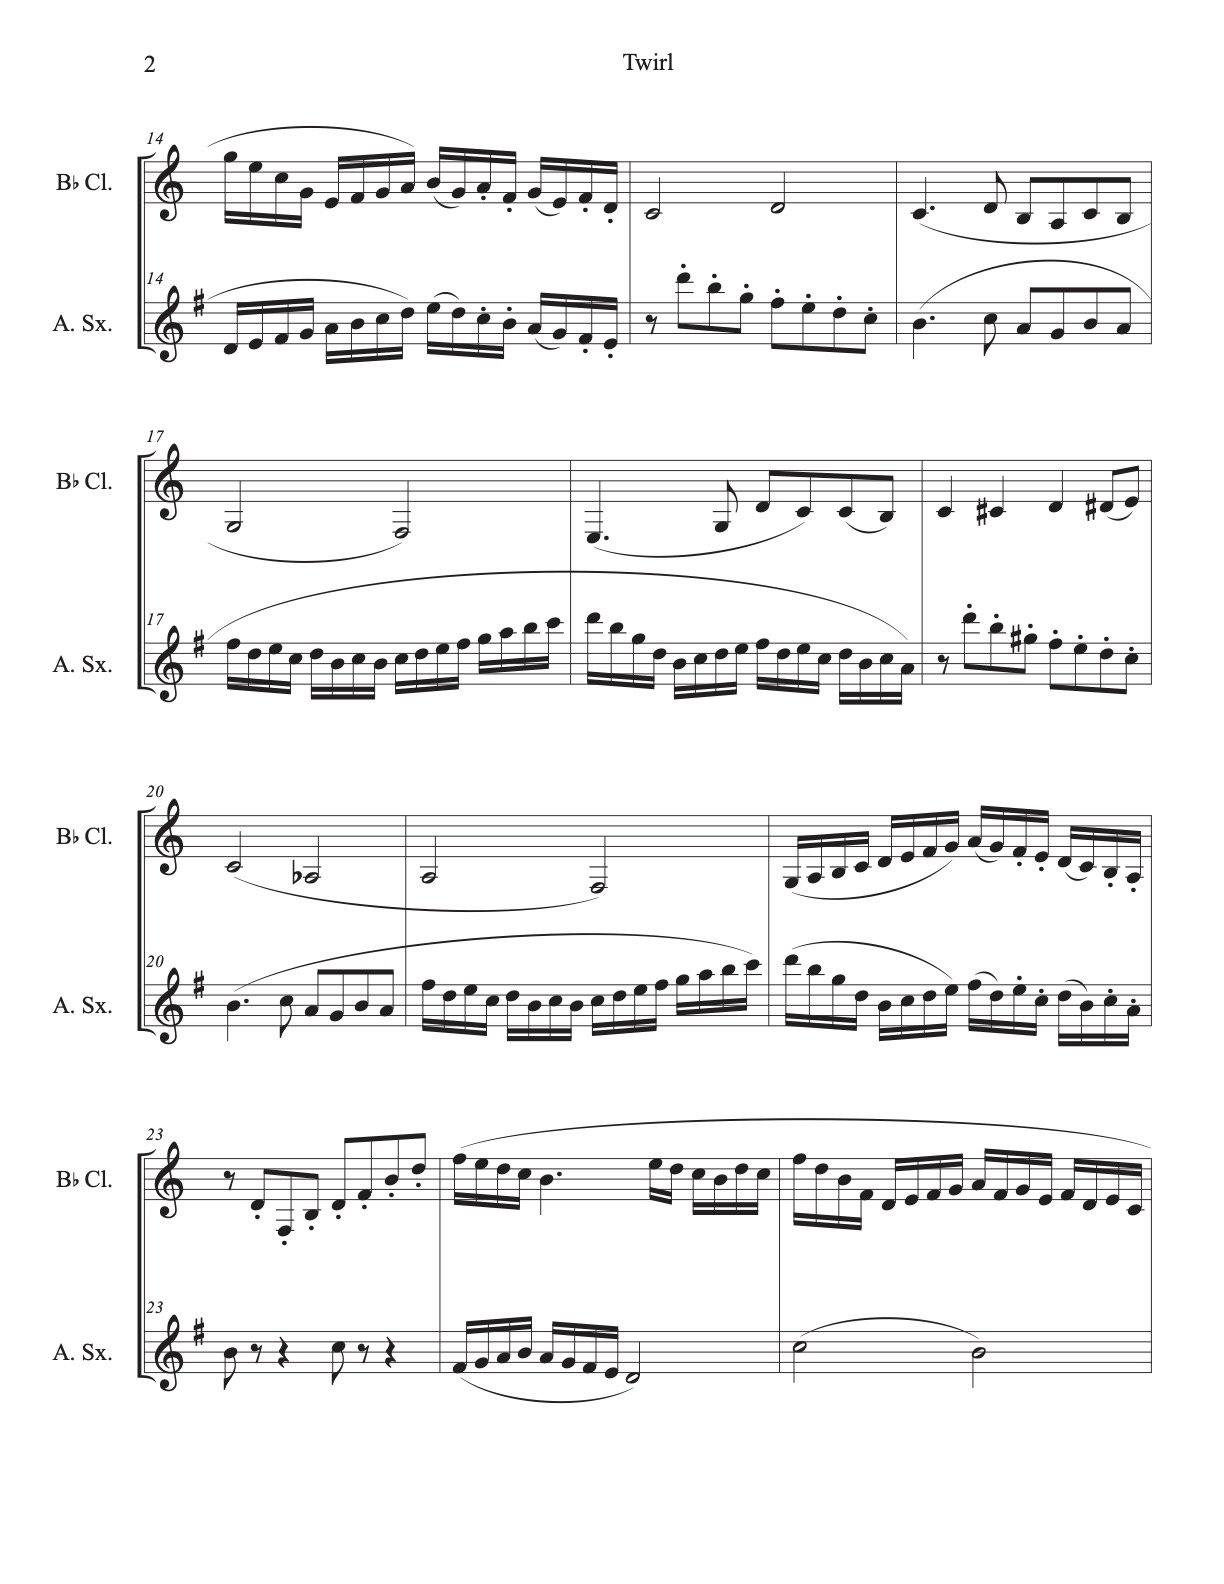 Twirl for BbClarinet and Alto Saxophone Duet (score+parts) - ChaipruckMekara